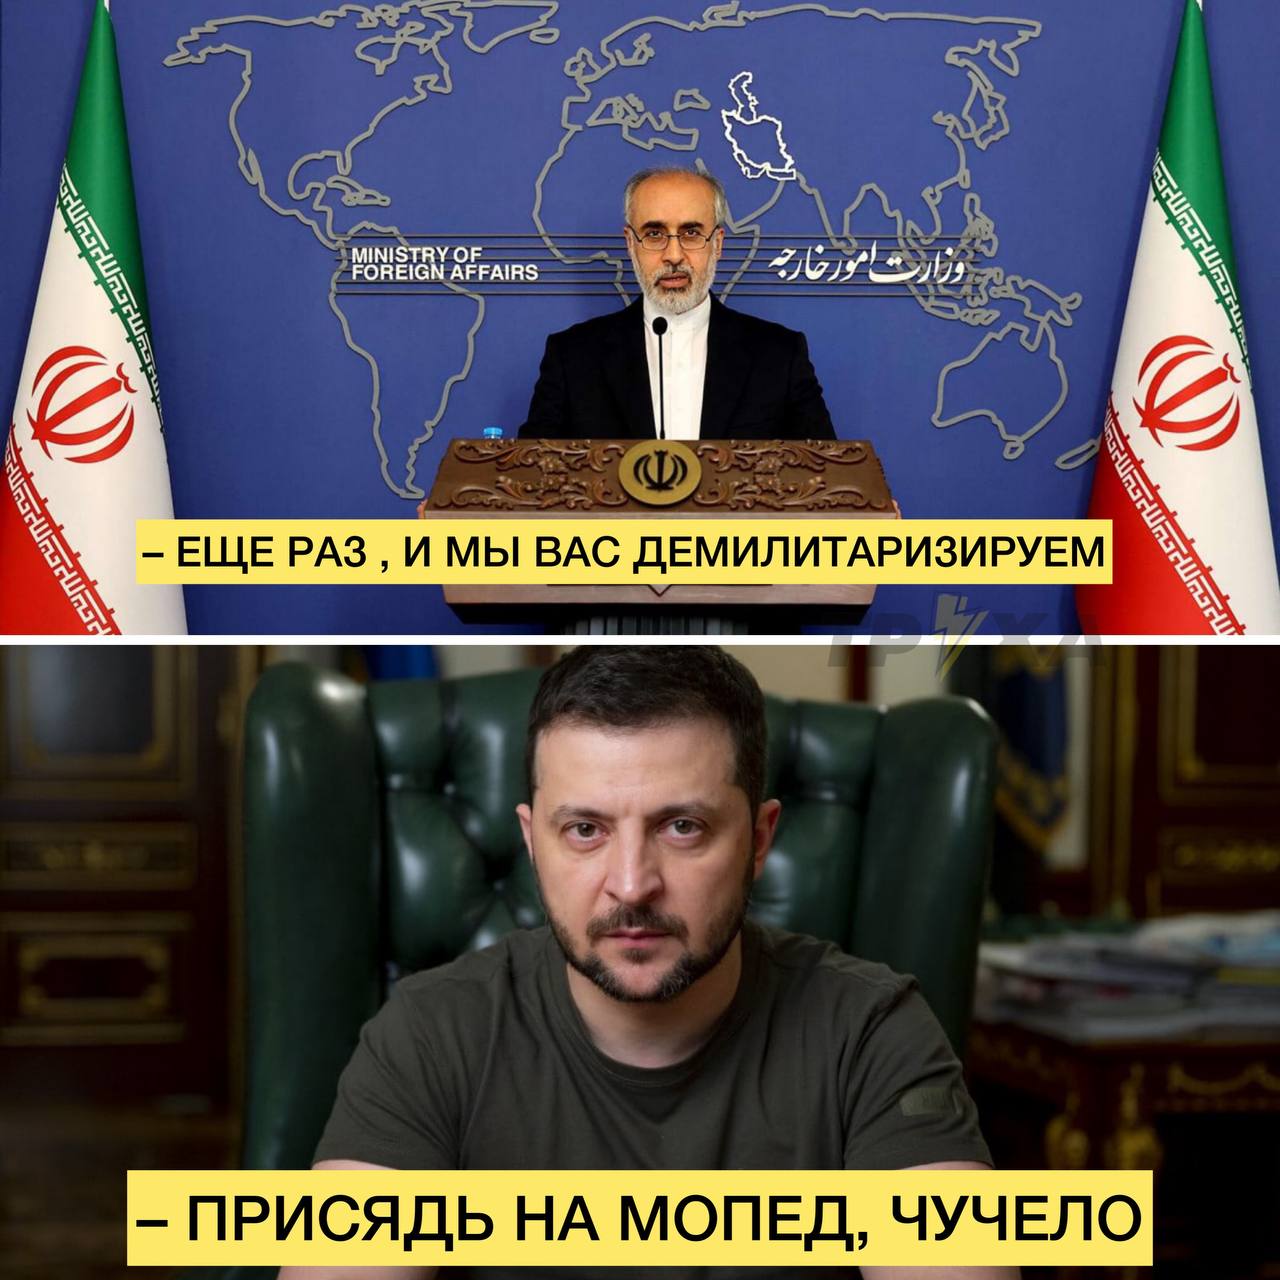 Иран угрожает Украине из-за речи